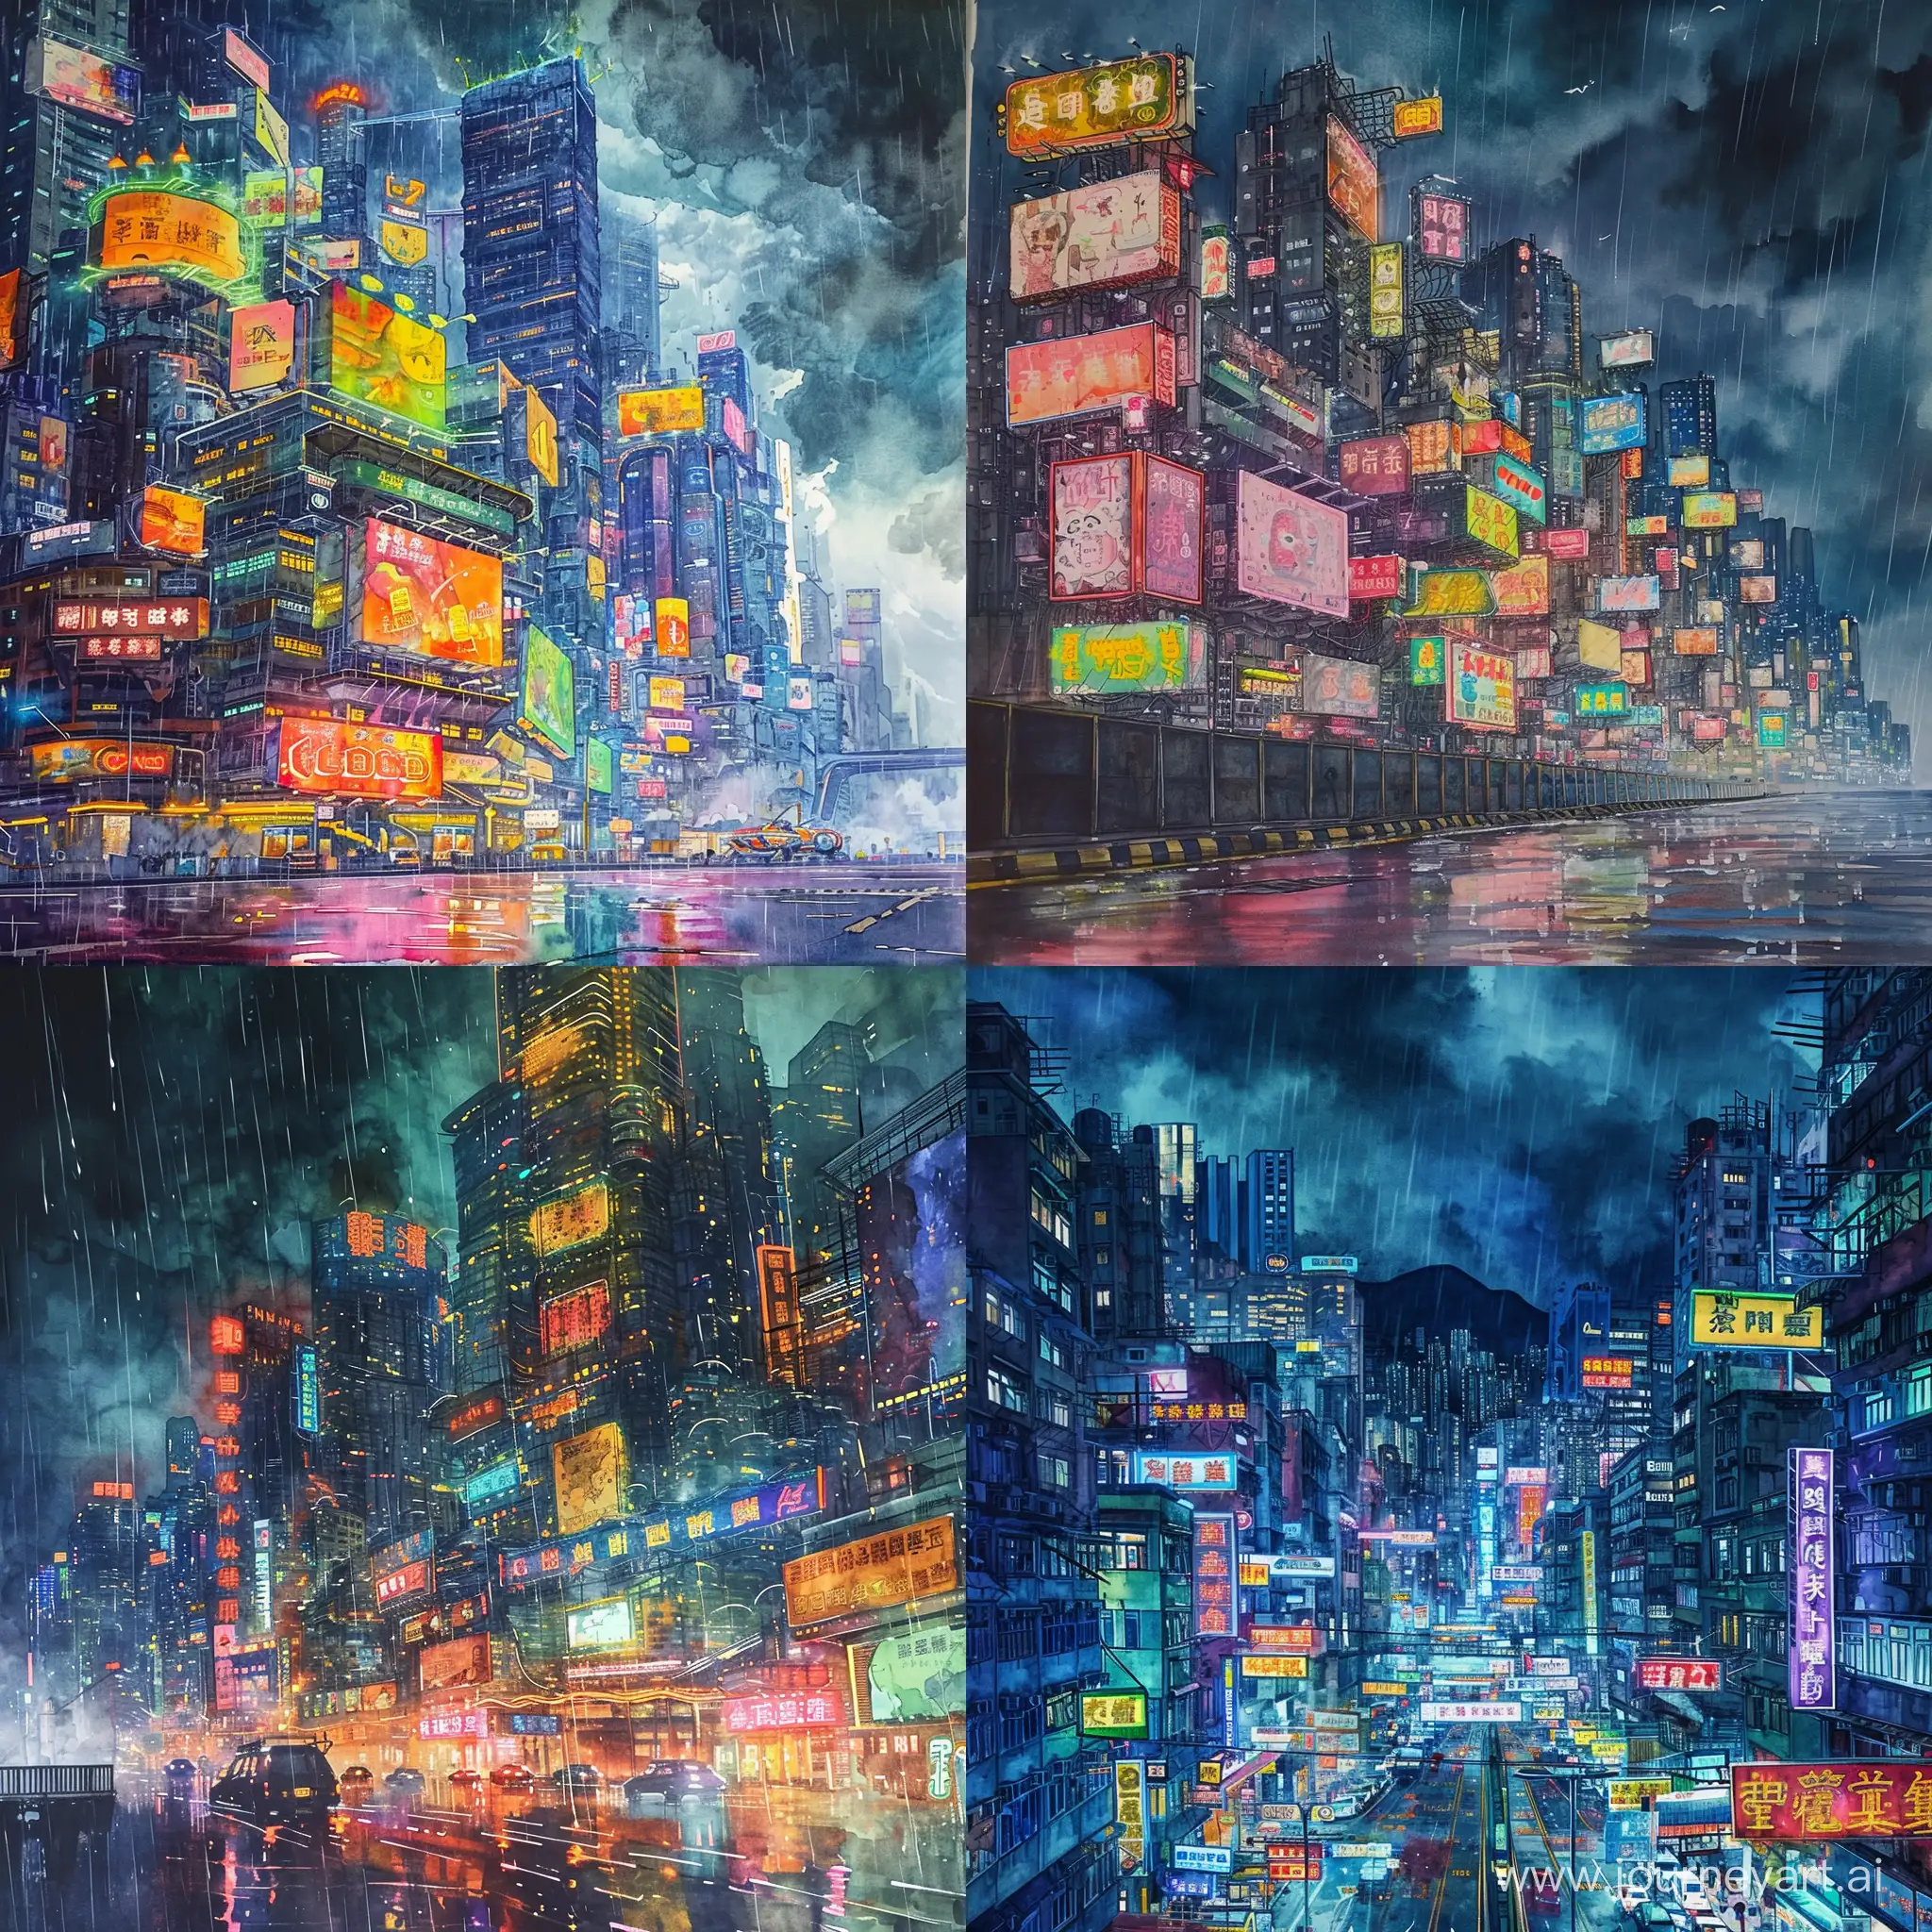 Futuristic-Cyberpunk-Cityscape-in-Neon-Glow-Amidst-Stormy-Weather